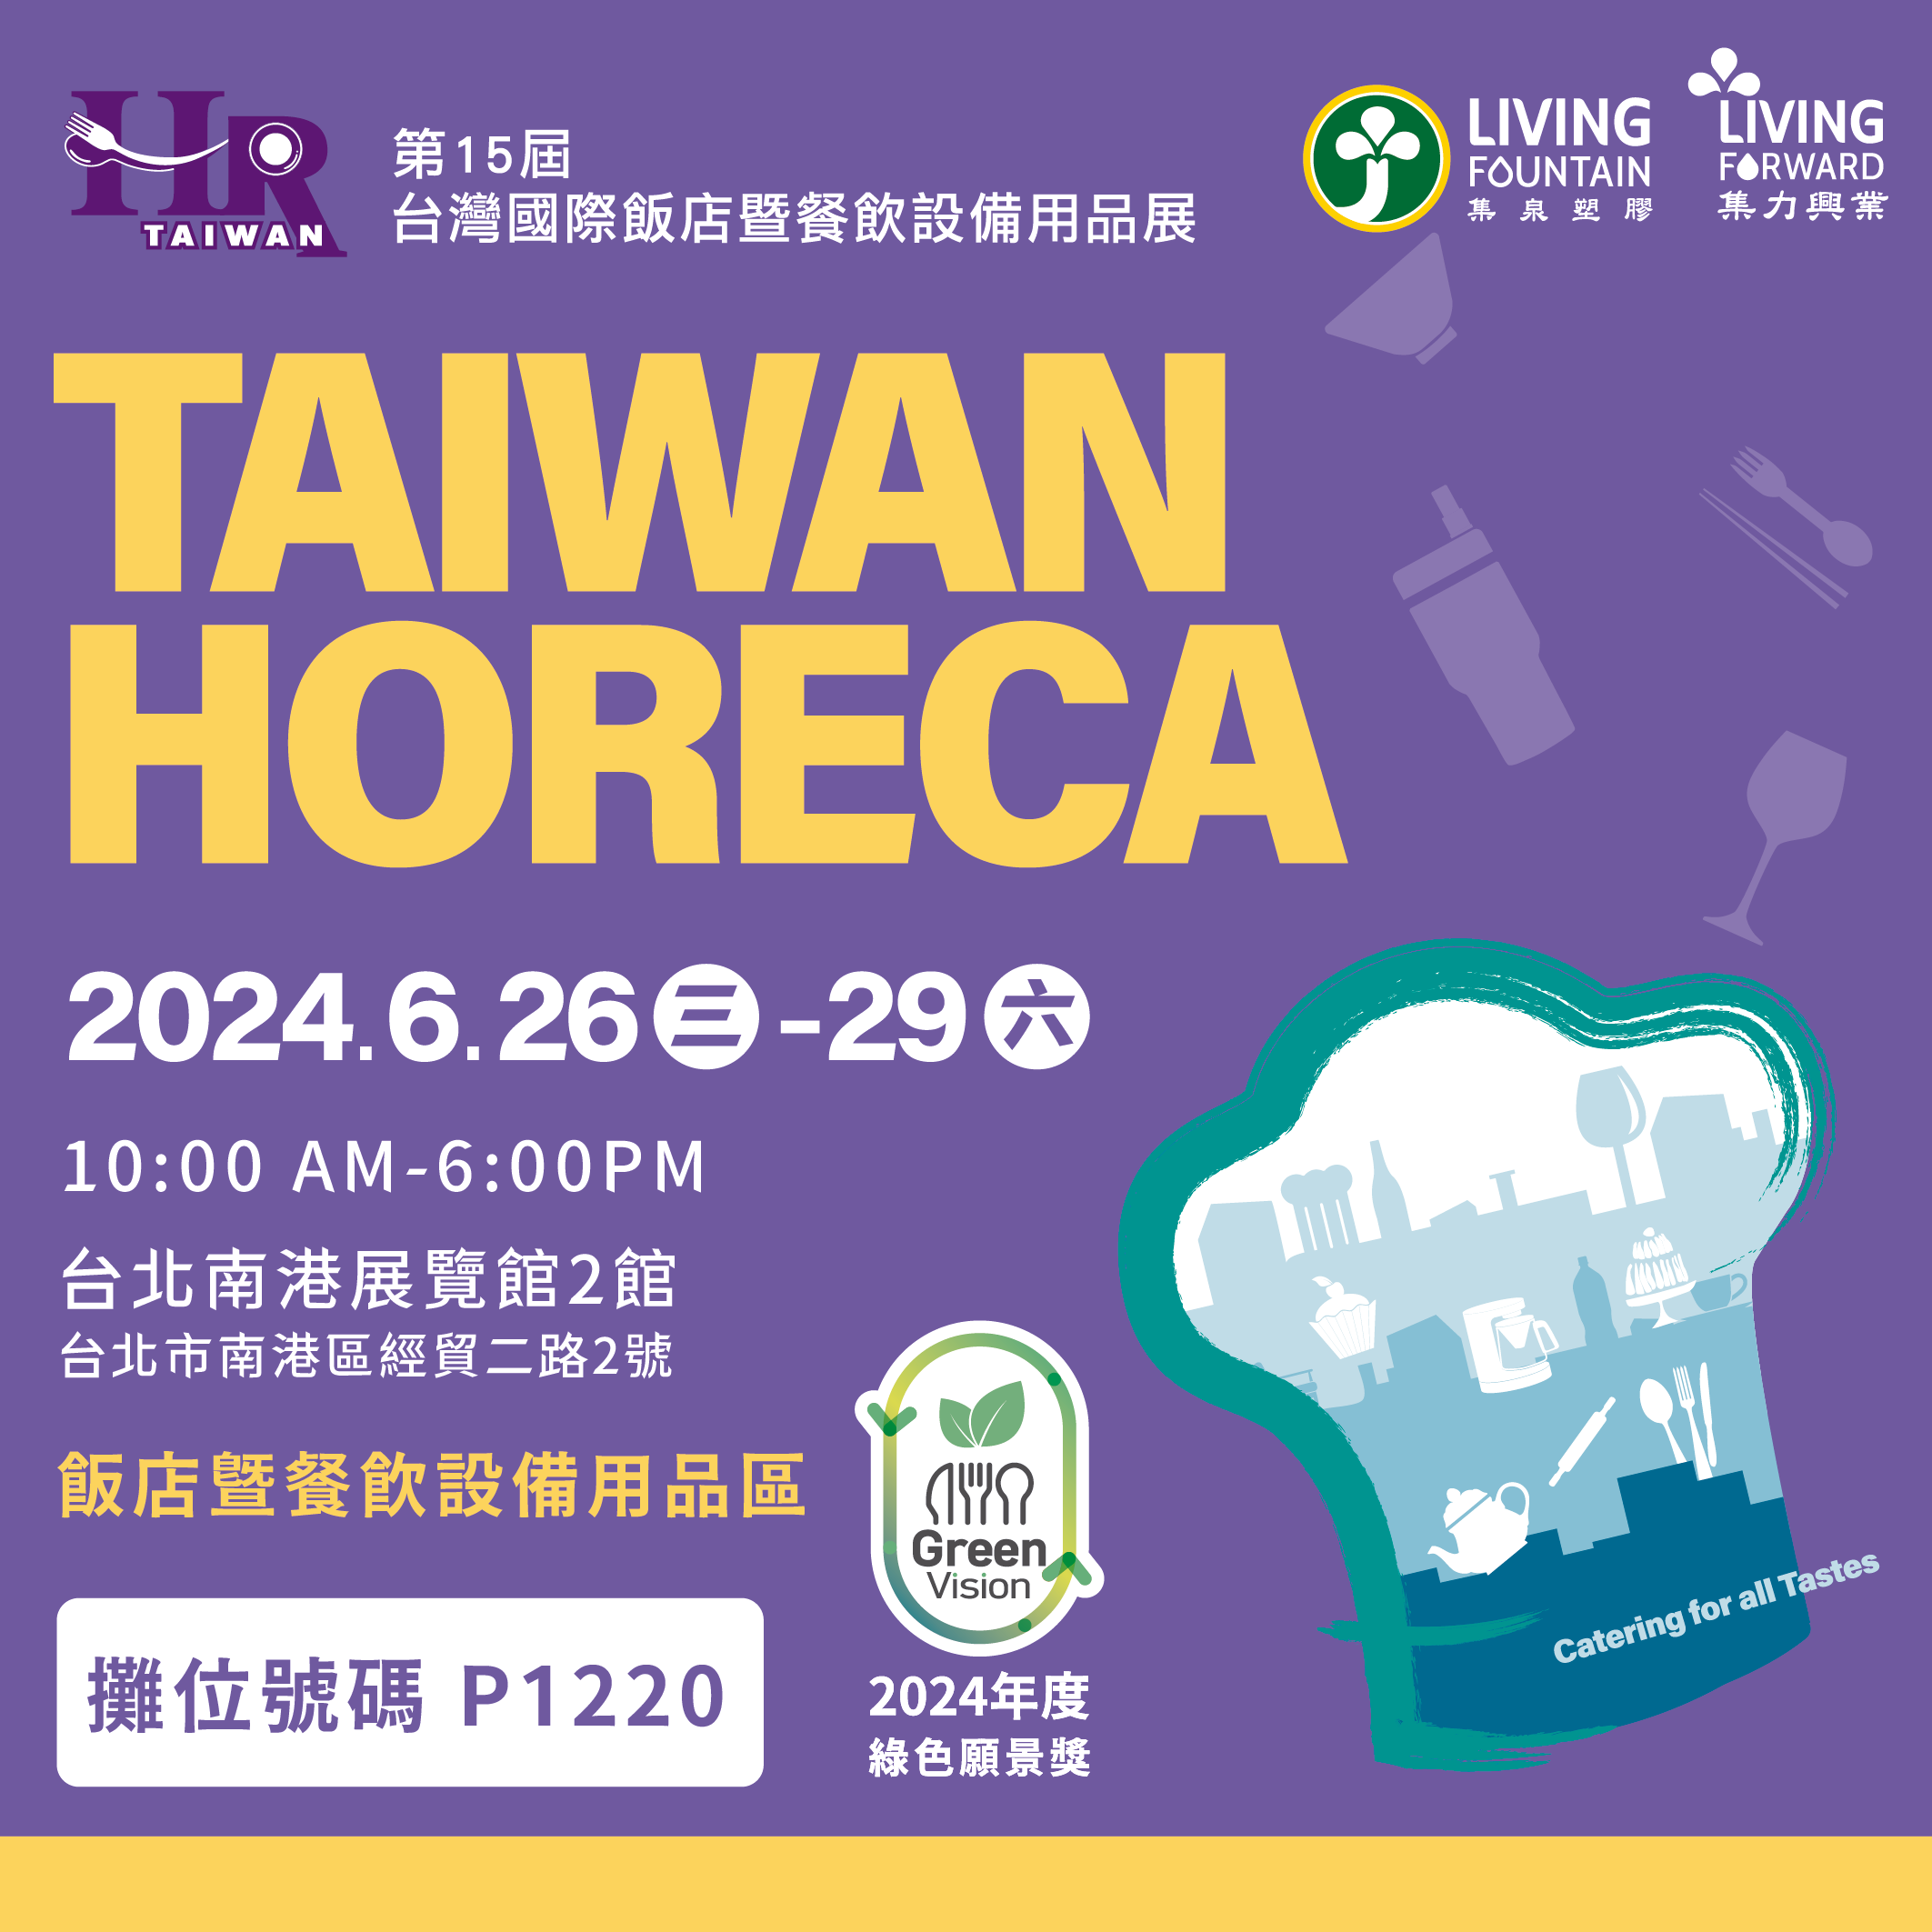 Living Fountain at Taiwan Horeca 2024